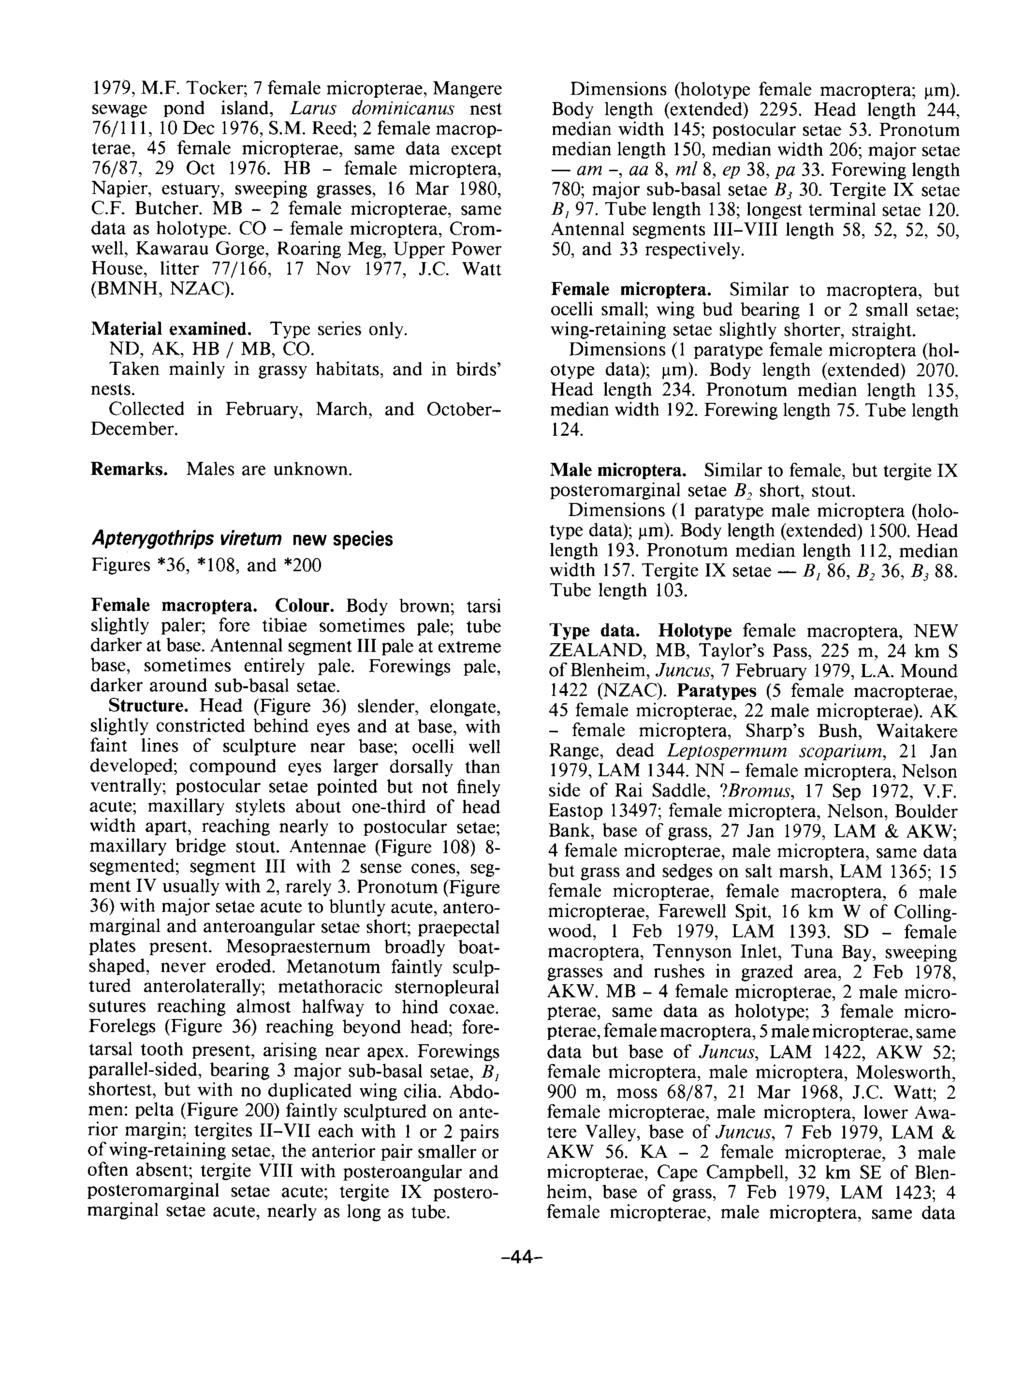 1979, M.F. Tocker; 7 female micropterae, Mangere sewage pond island, Larus dominicanus nest 76/111, 10 Dec 1976, S.M. Reed; 2 female macropterae, 45 female micropterae, same data except 76/87, 29 Oct 1976.